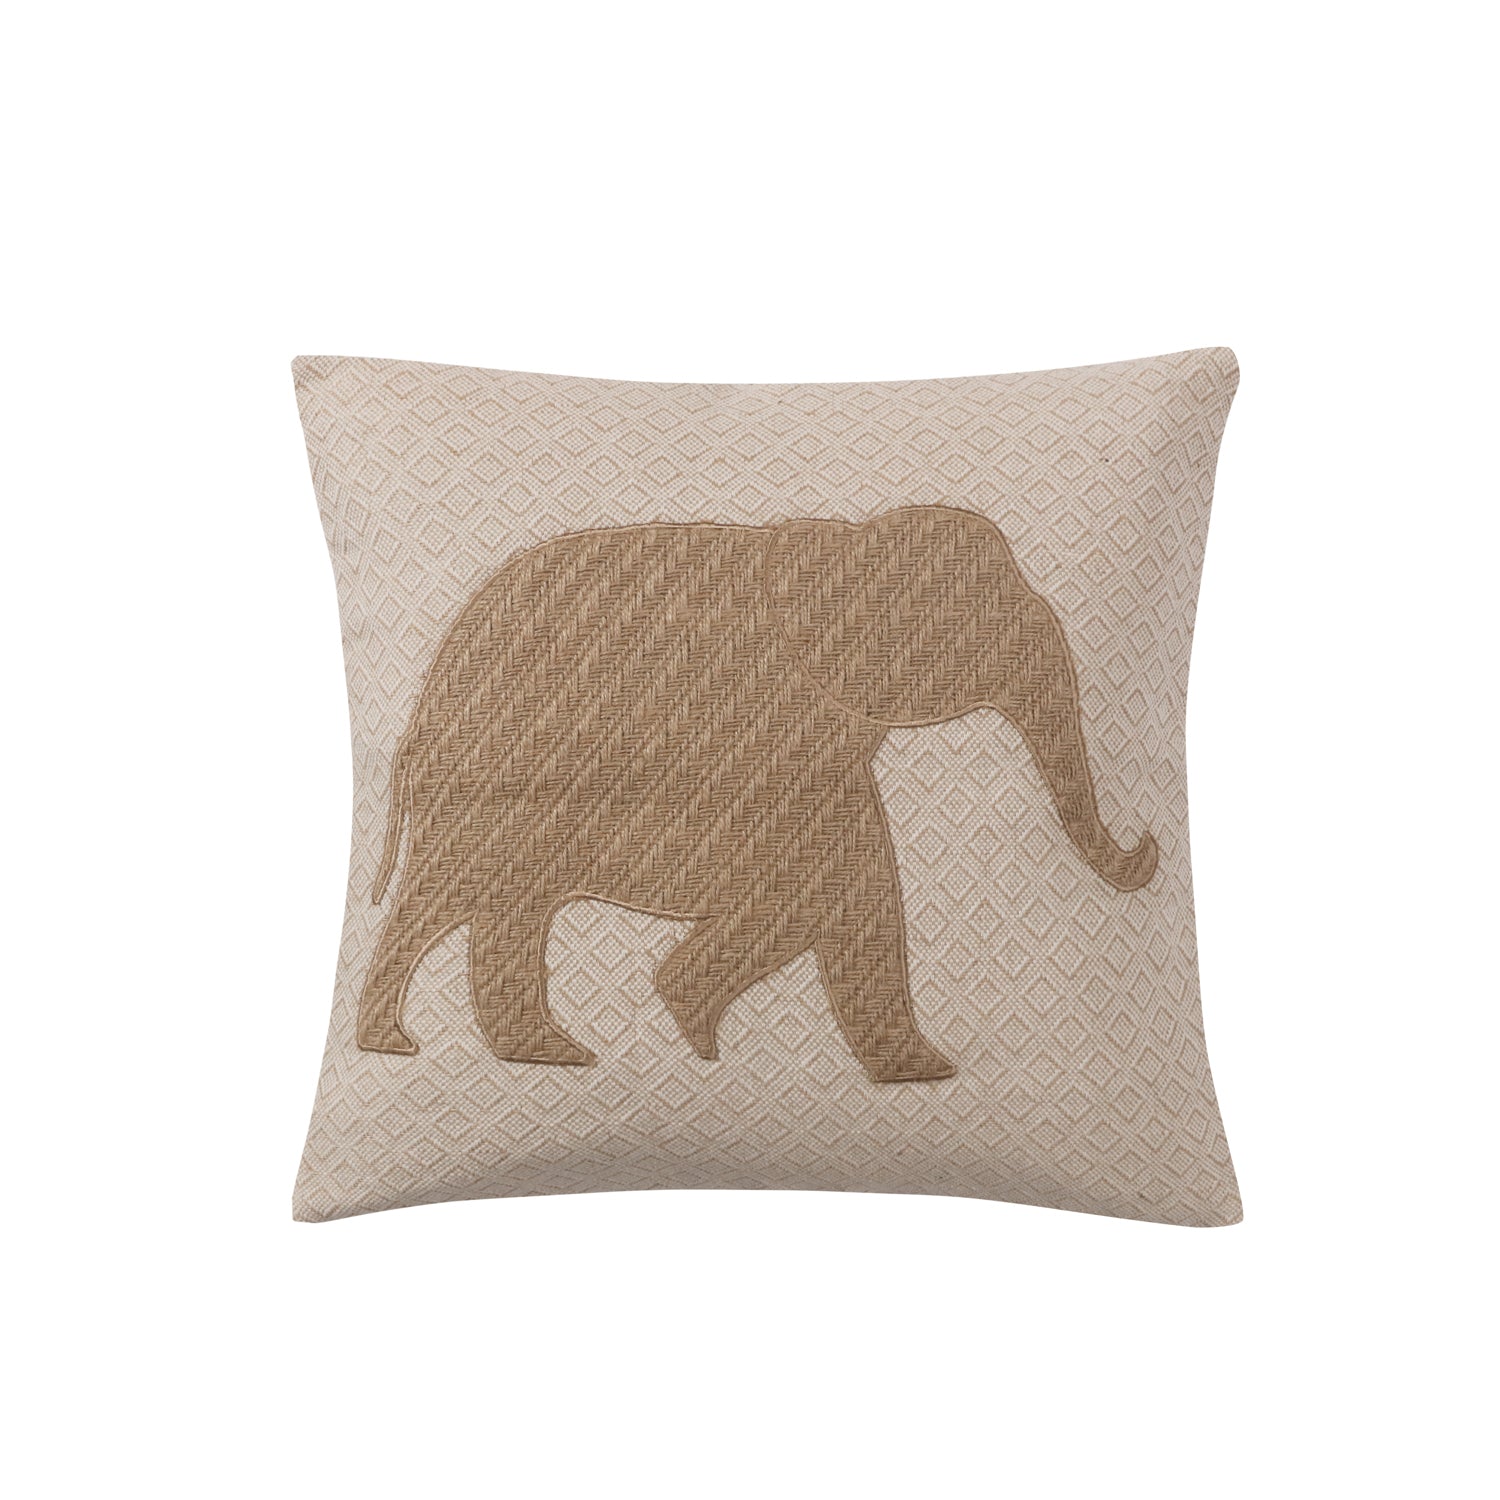 Maybelle Basketweave Elephant Pillow